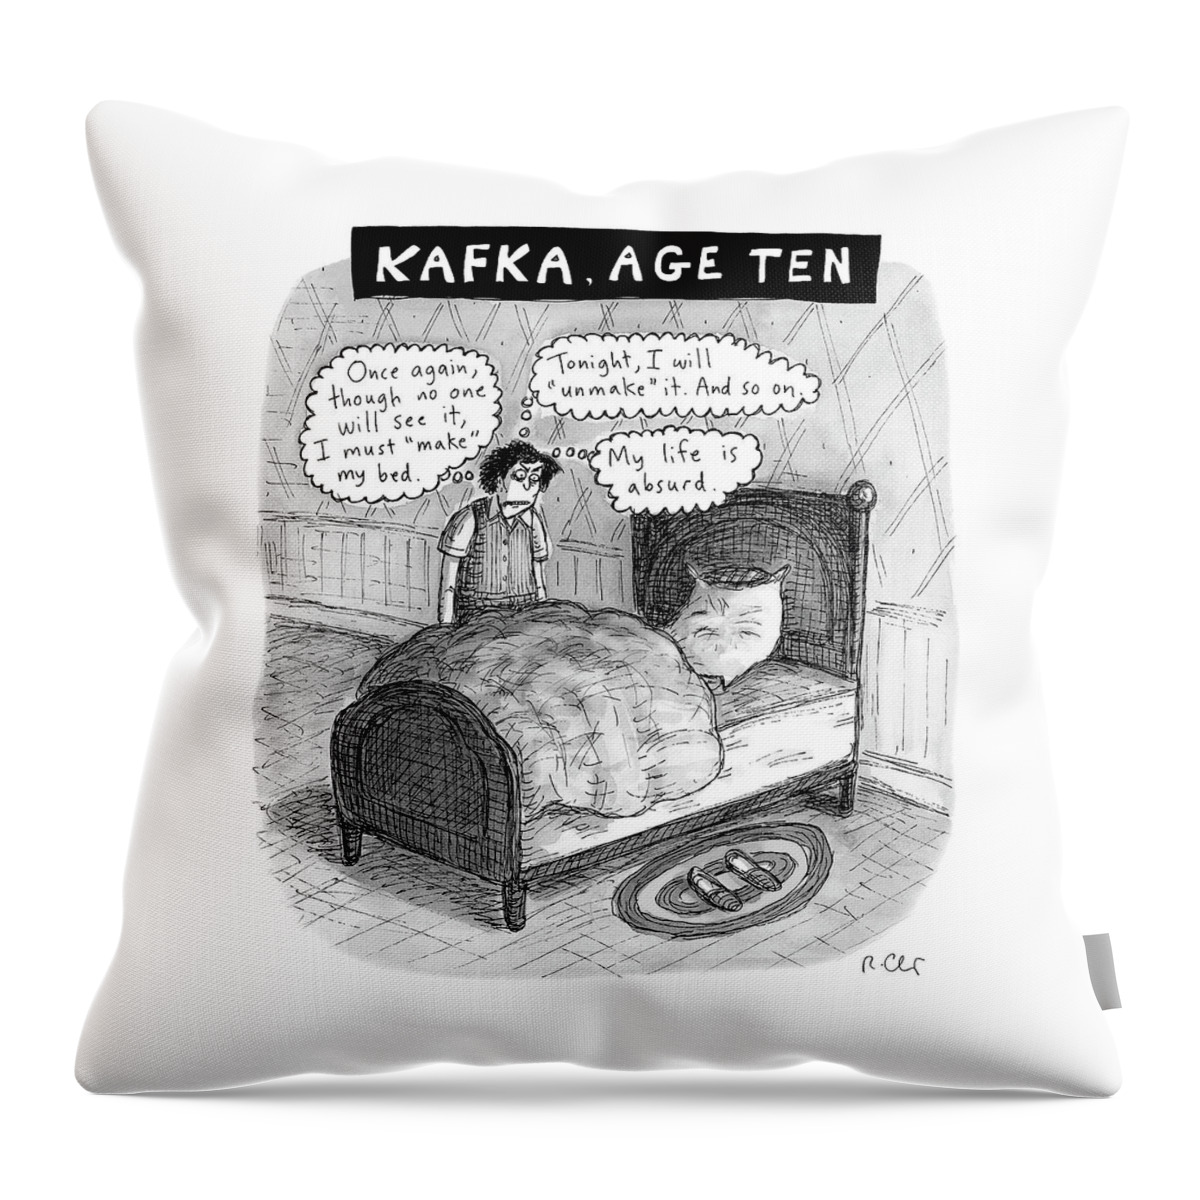 Kafka Age Ten Throw Pillow